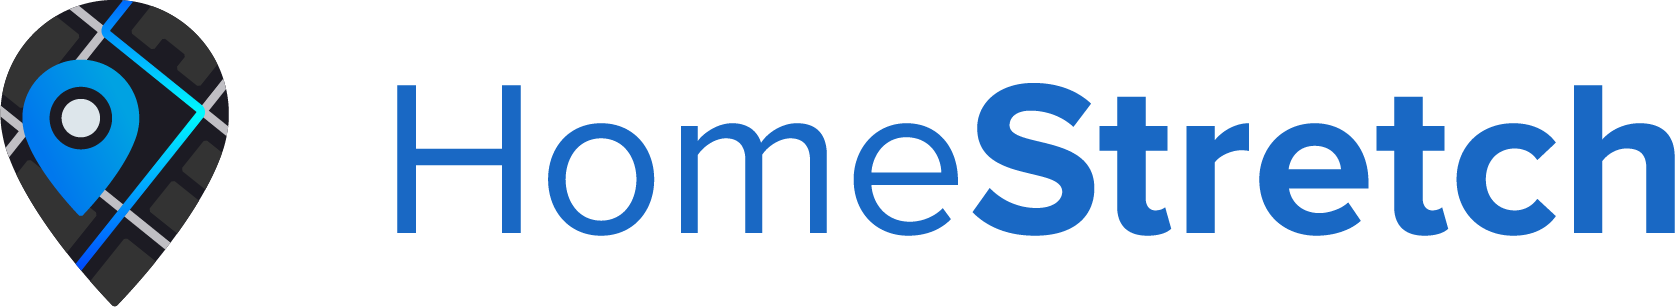 HomeStretch logo